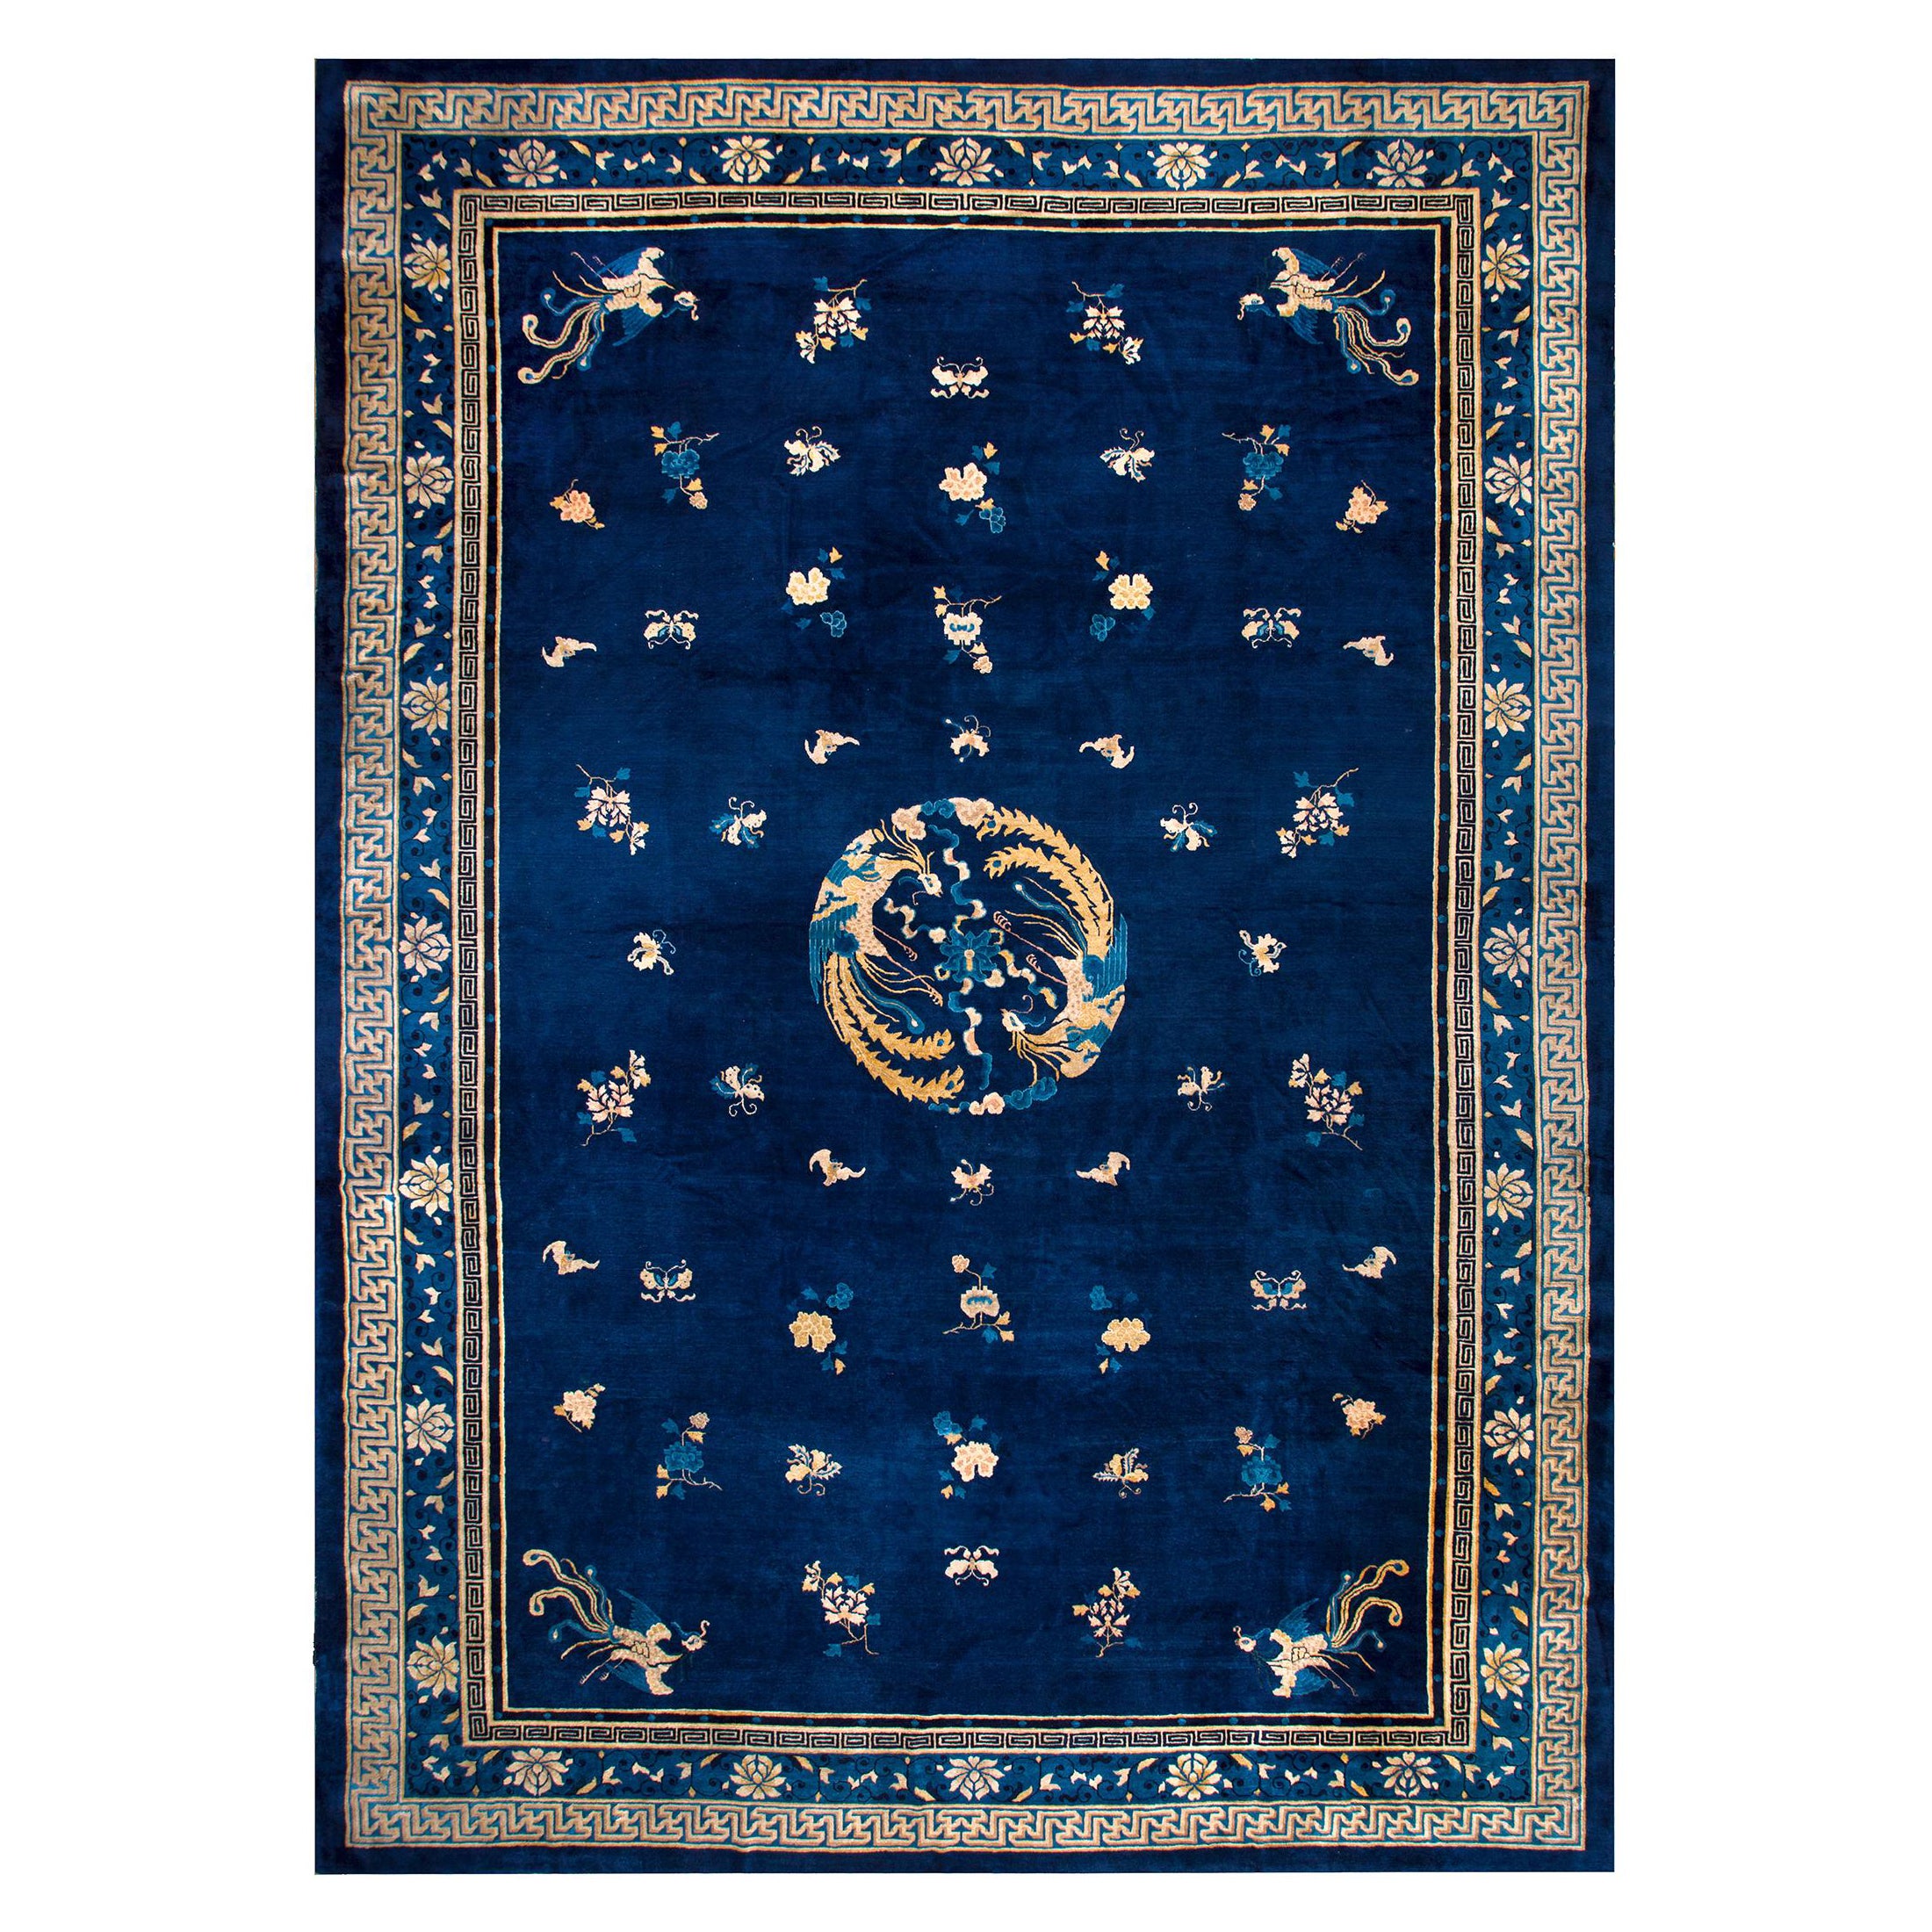 19th Century Chinese Peking Carpet ( 14' x 19'2" - 427 x 584 )